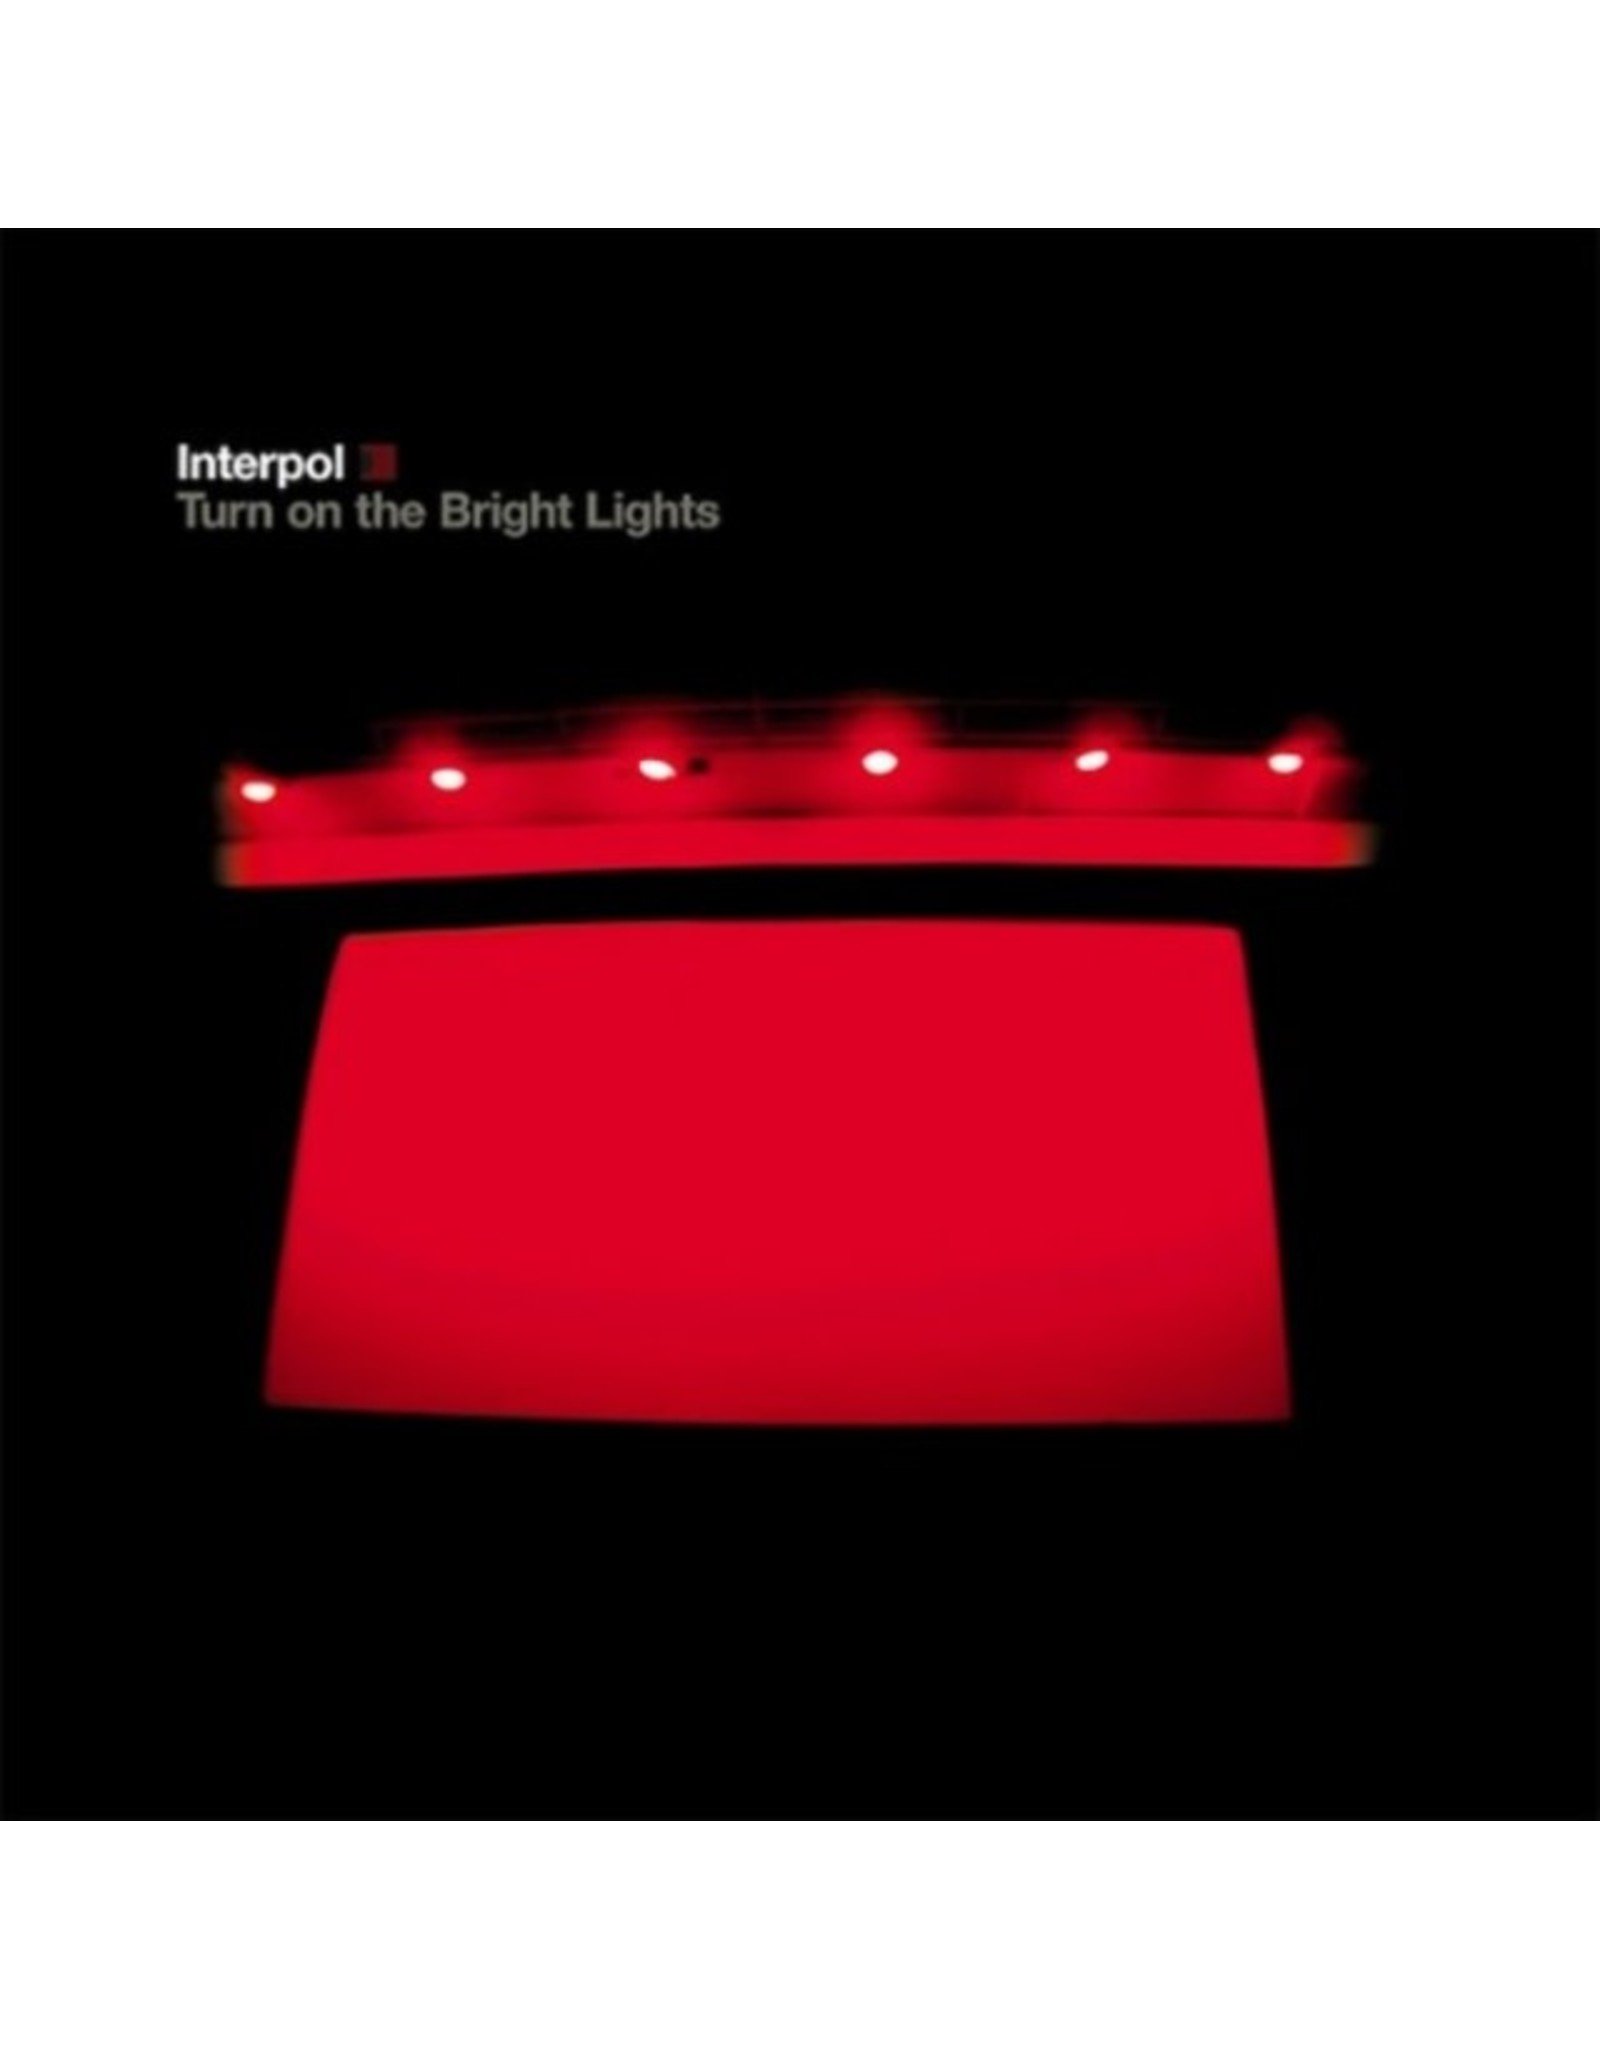 New Vinyl Interpol - Turn On The Bright Lights LP